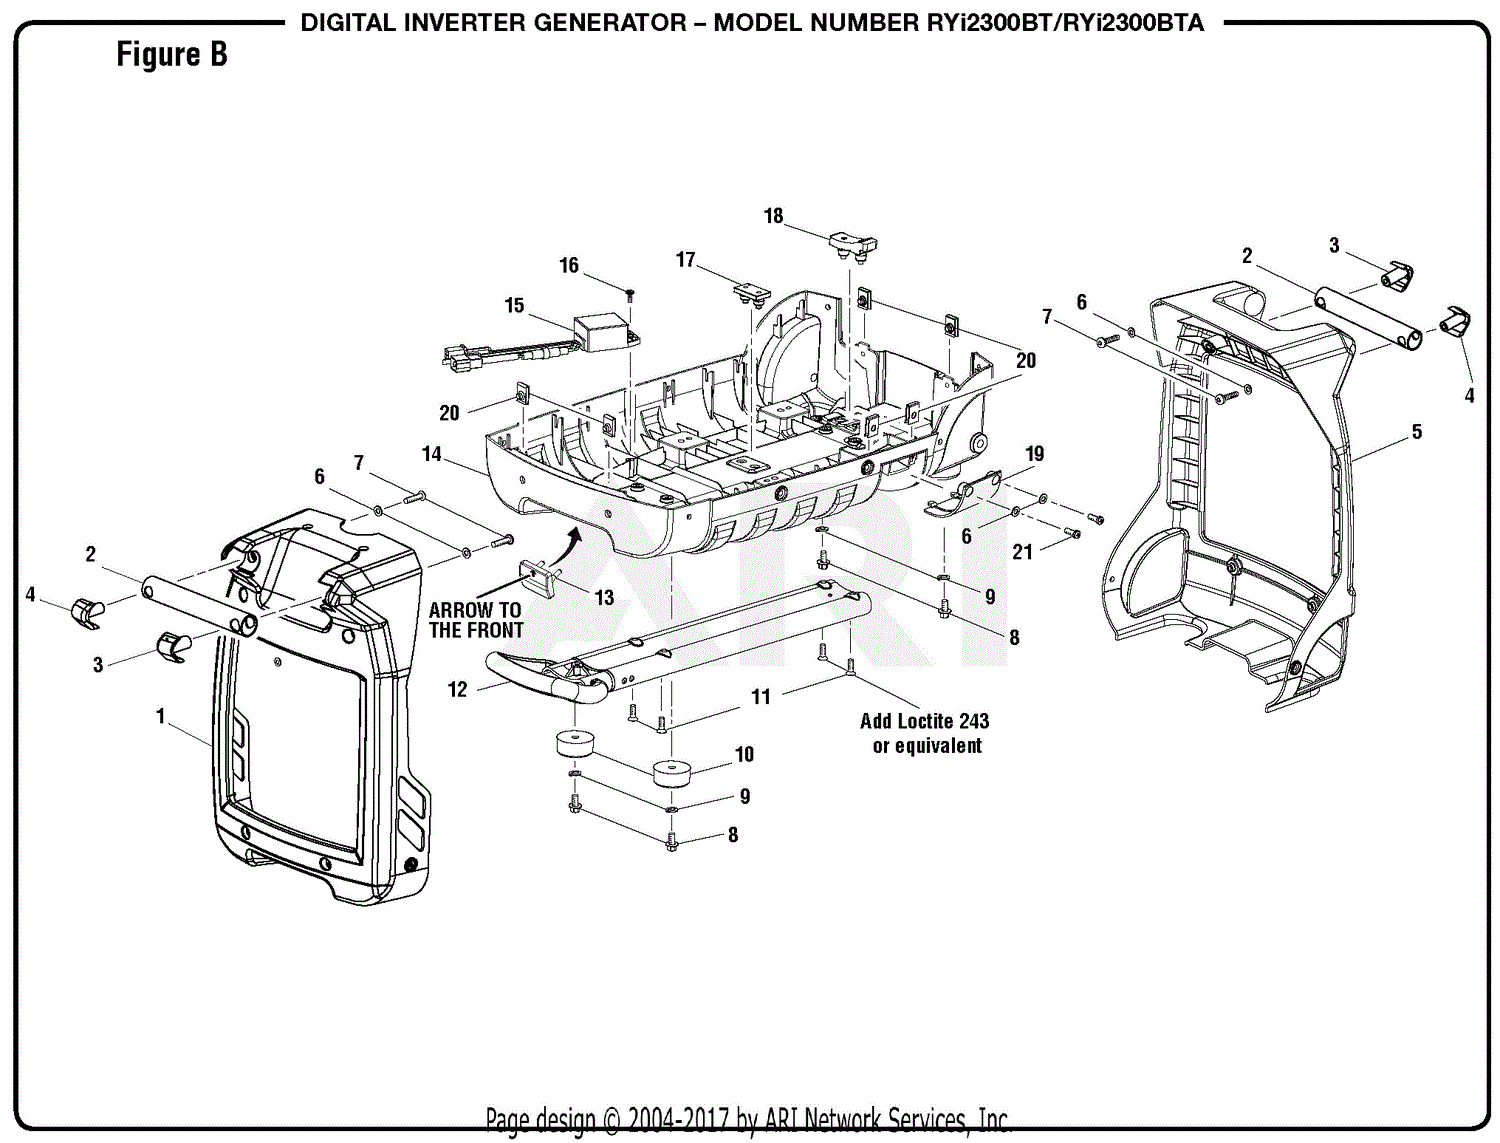 Homelite RYi2300BTA Digital Inverter Generator Mfg. No. 090930330 7-14-17 ( Rev:01) Parts Diagram for Figure B